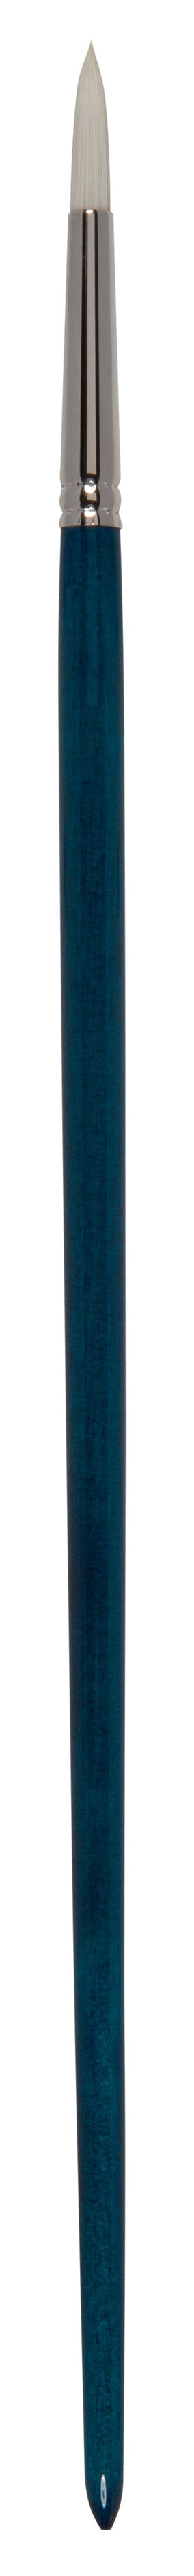 Zahn Acrylic Brush Round, Infinity, 9975 Size 12